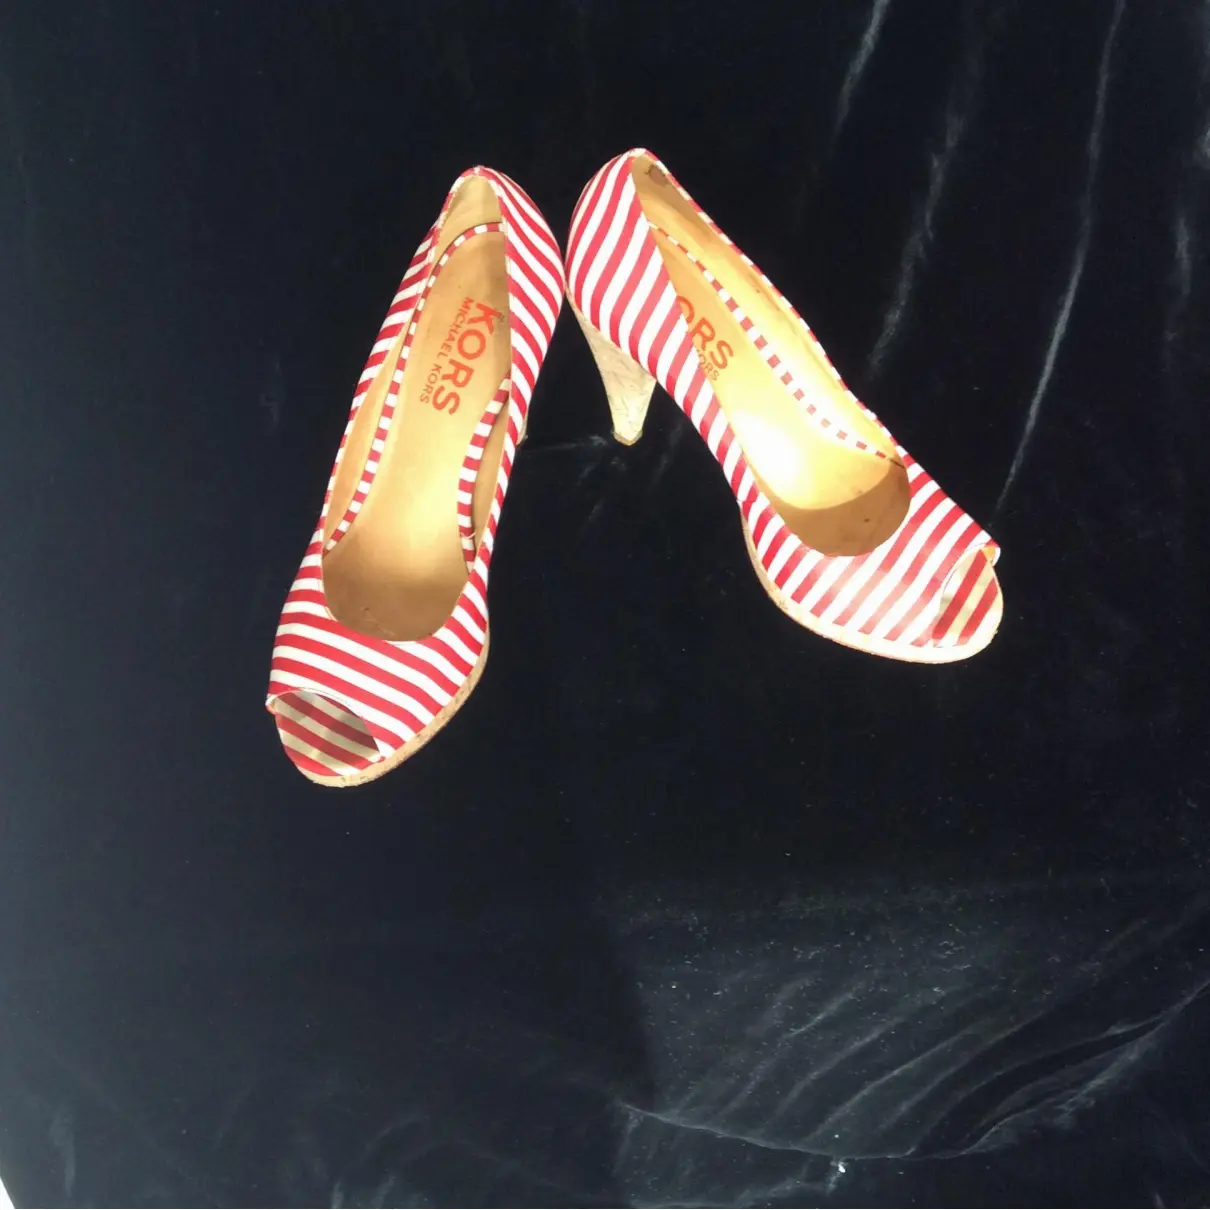 Kors Michael Kors Cloth heels for sale